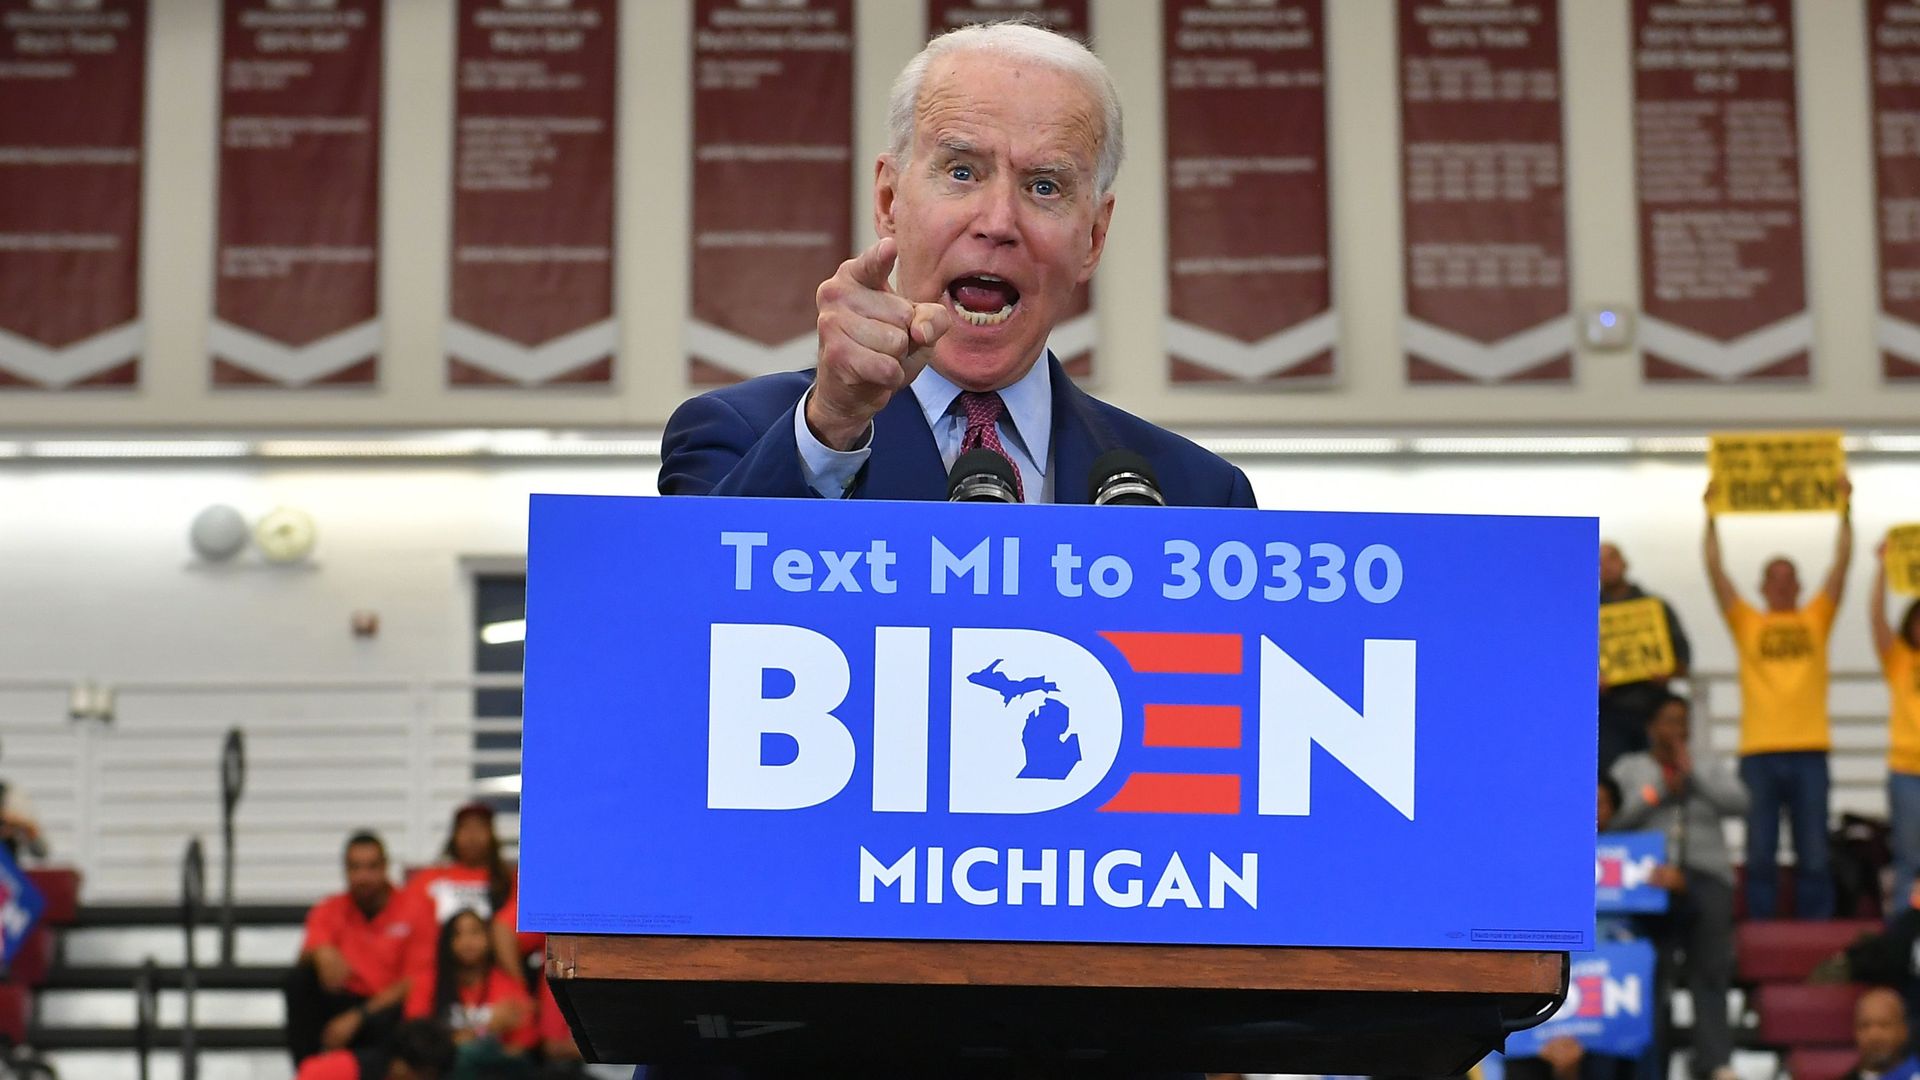 Joe Biden speaks at a Michigan rally.